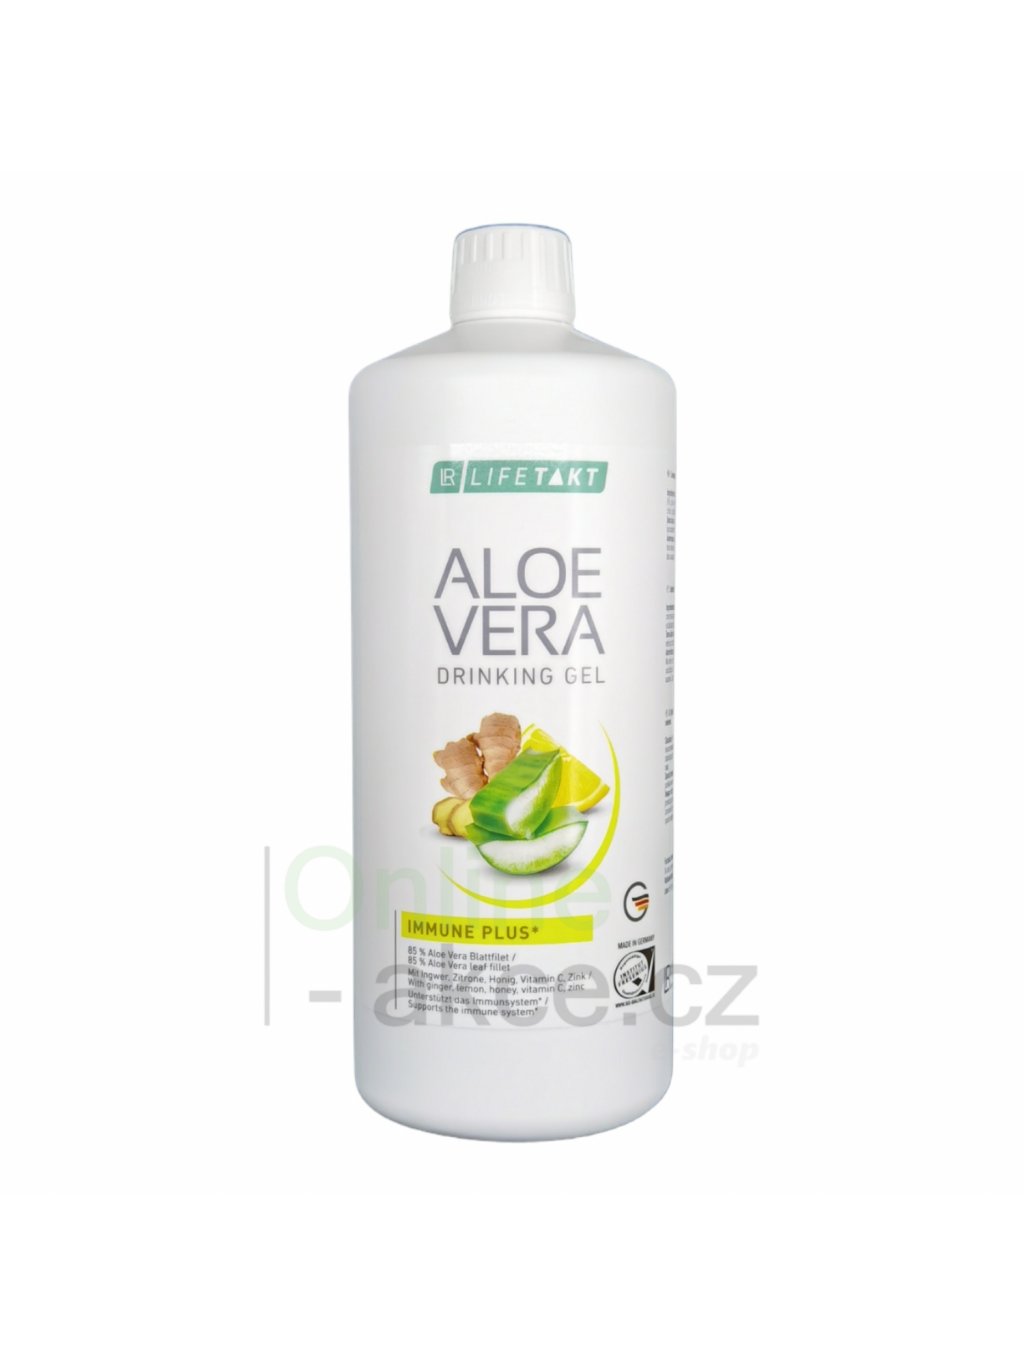 LR Aloe Vera Drinking Gel Immune Plus